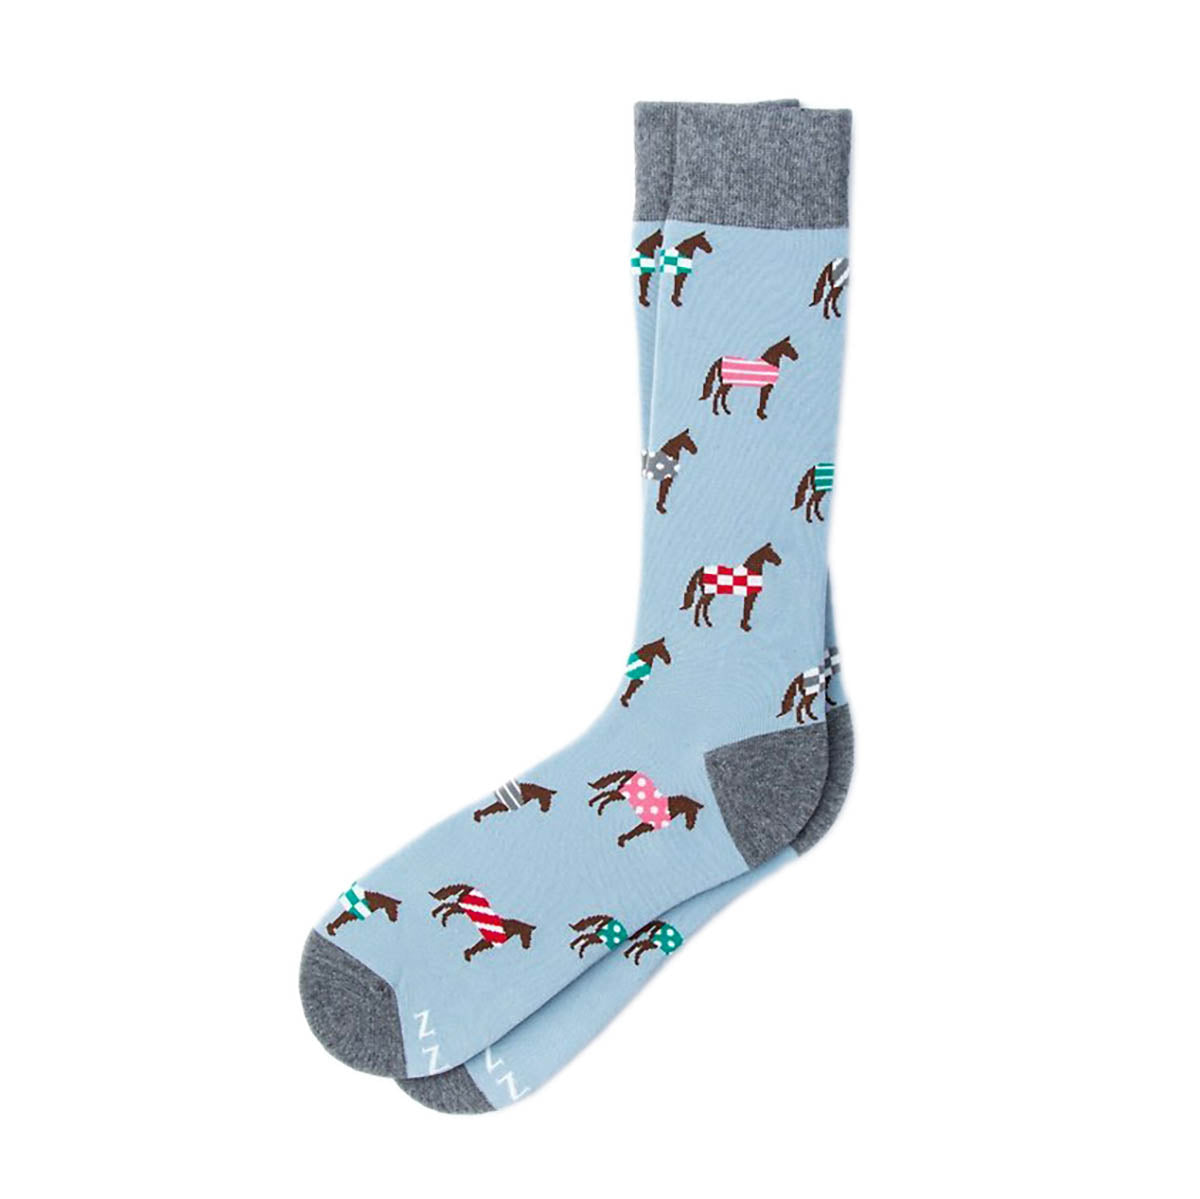 Wild Attire Inc. Horsin' Around Carded Cotton Socks